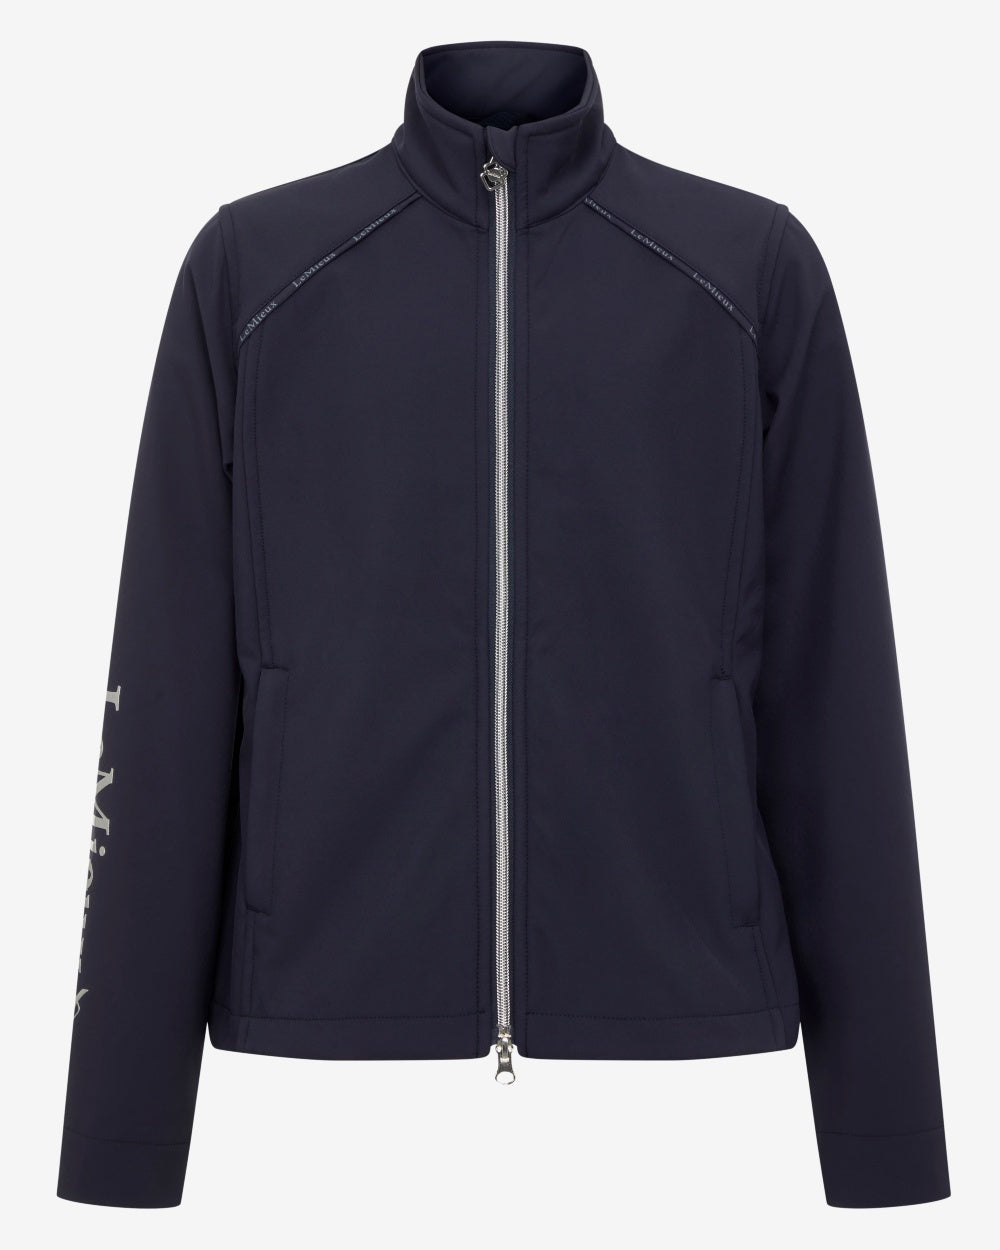 Navy coloured LeMieux Young Rider Elite Soft Shell Jacket on grey background 